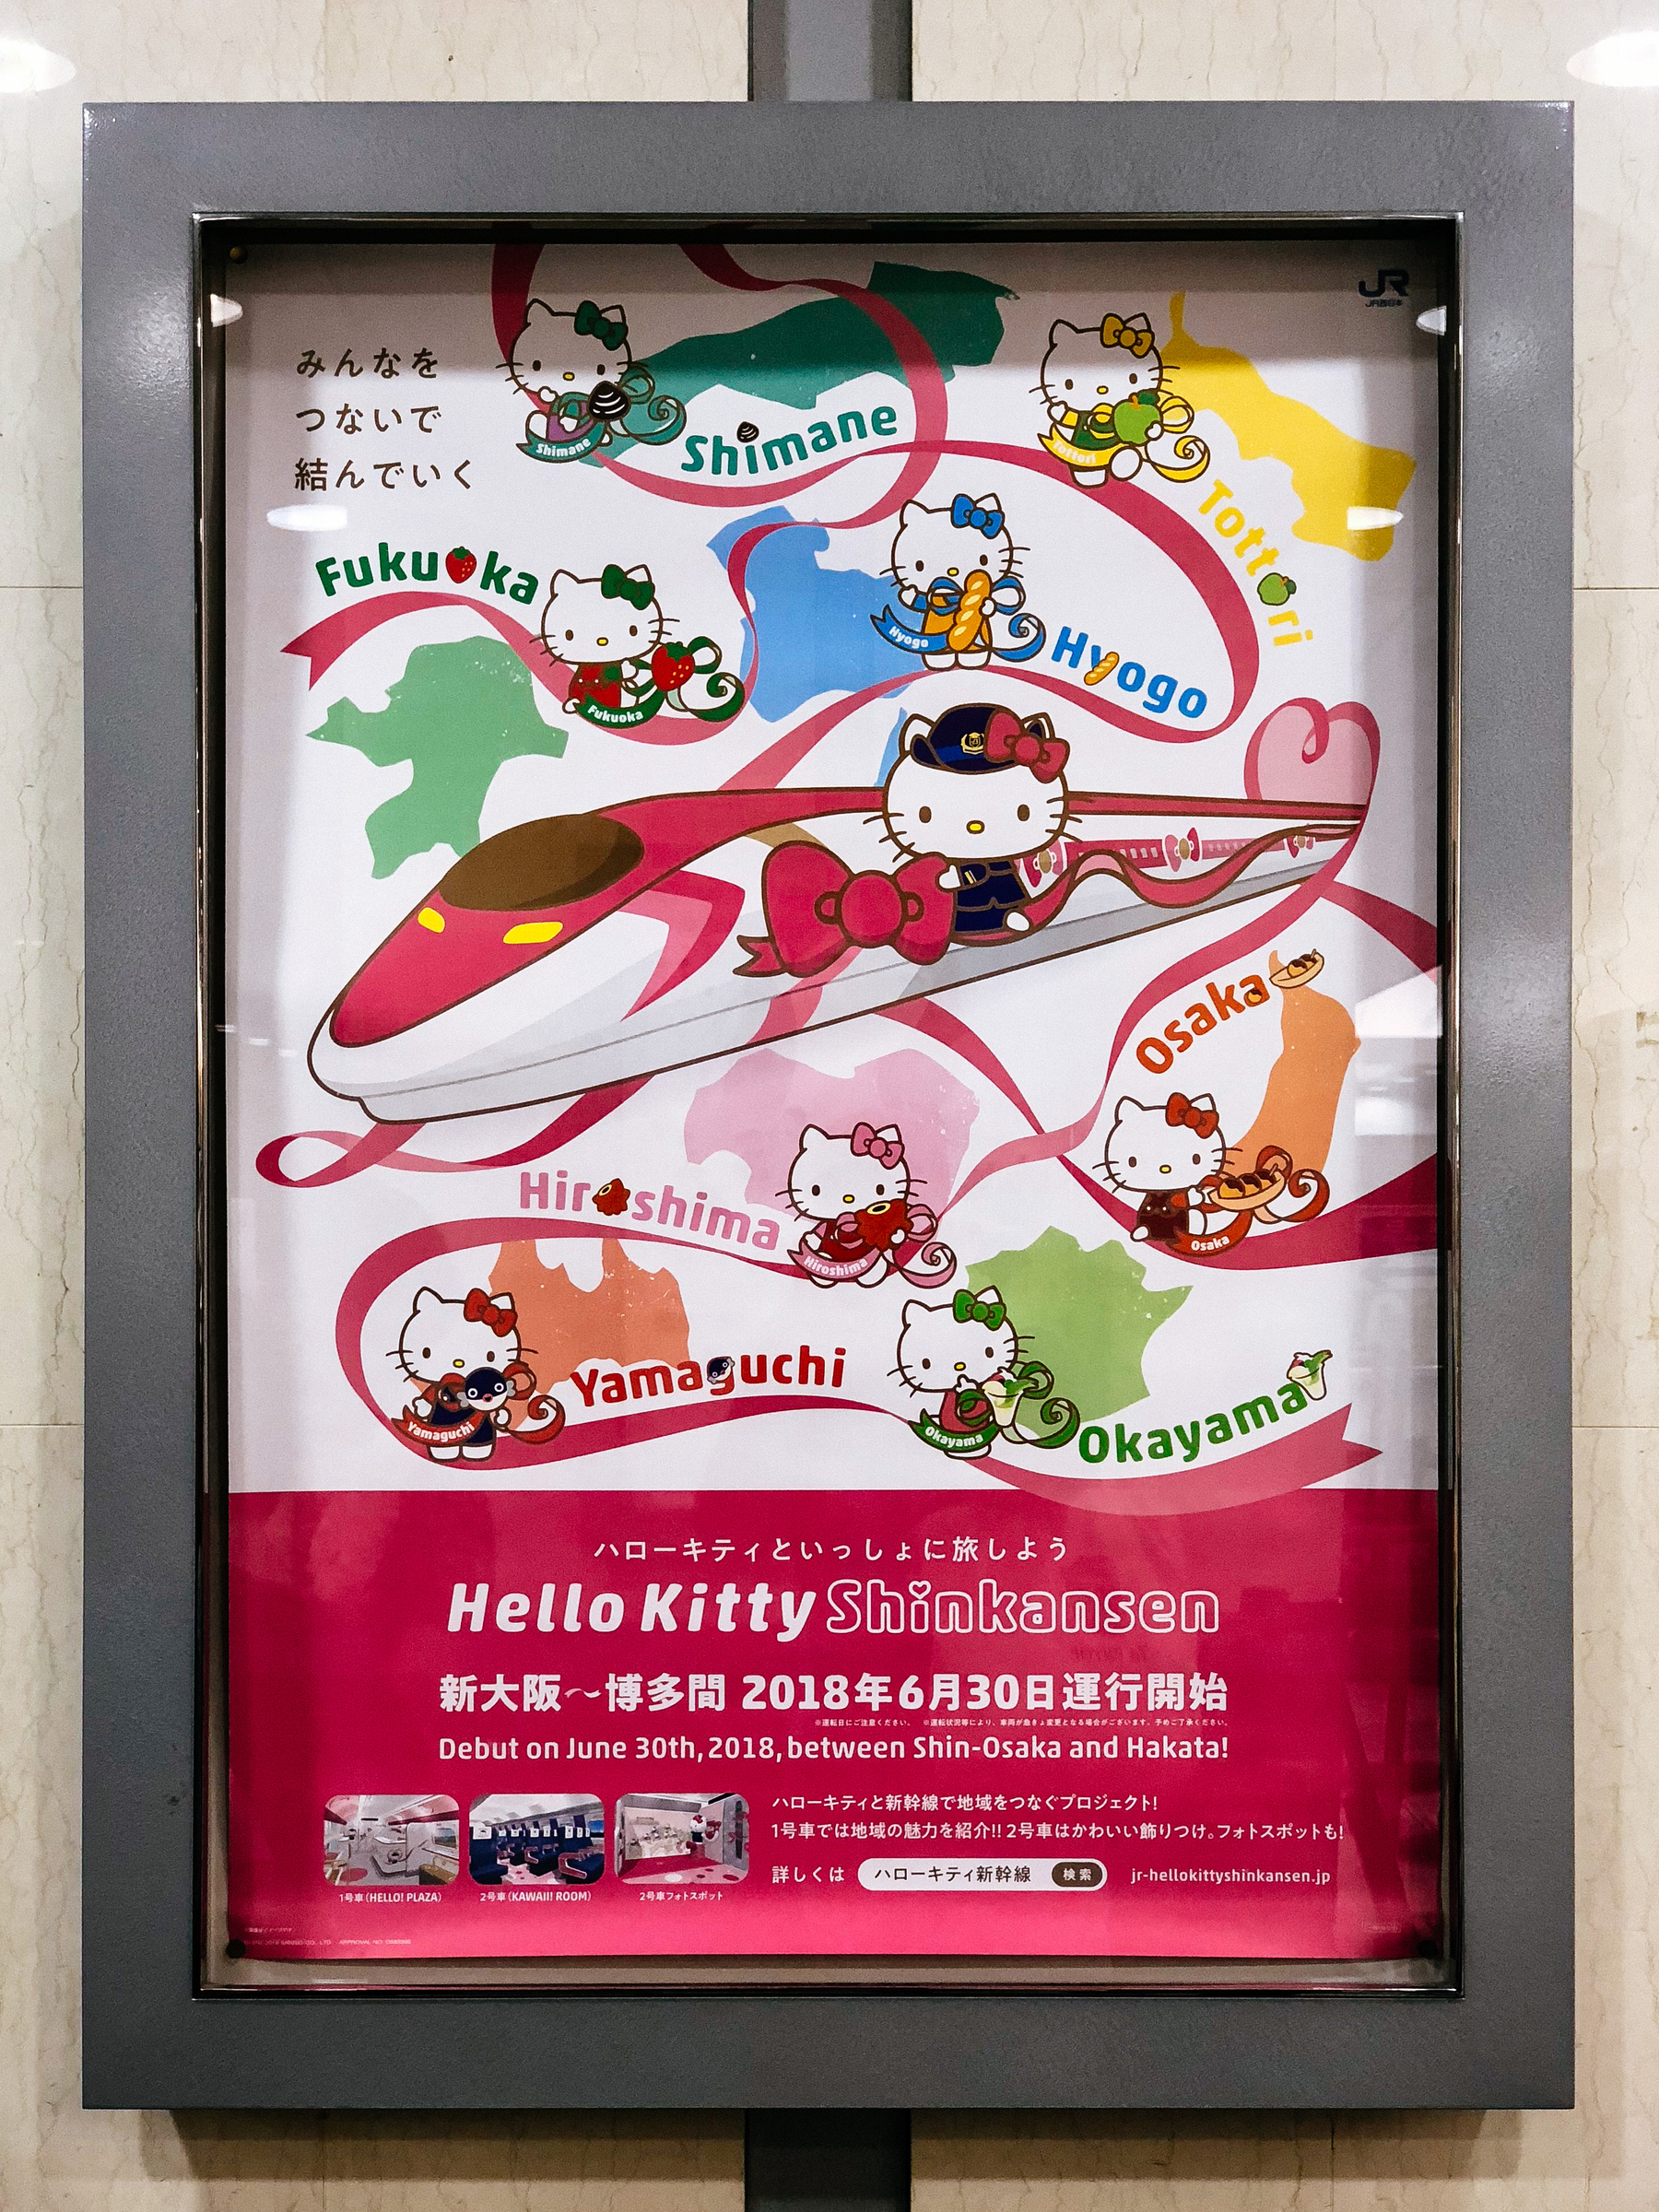 A poster ad for Hello Kitty Shinkansen, an Hello Kitty themed train in Japan. 